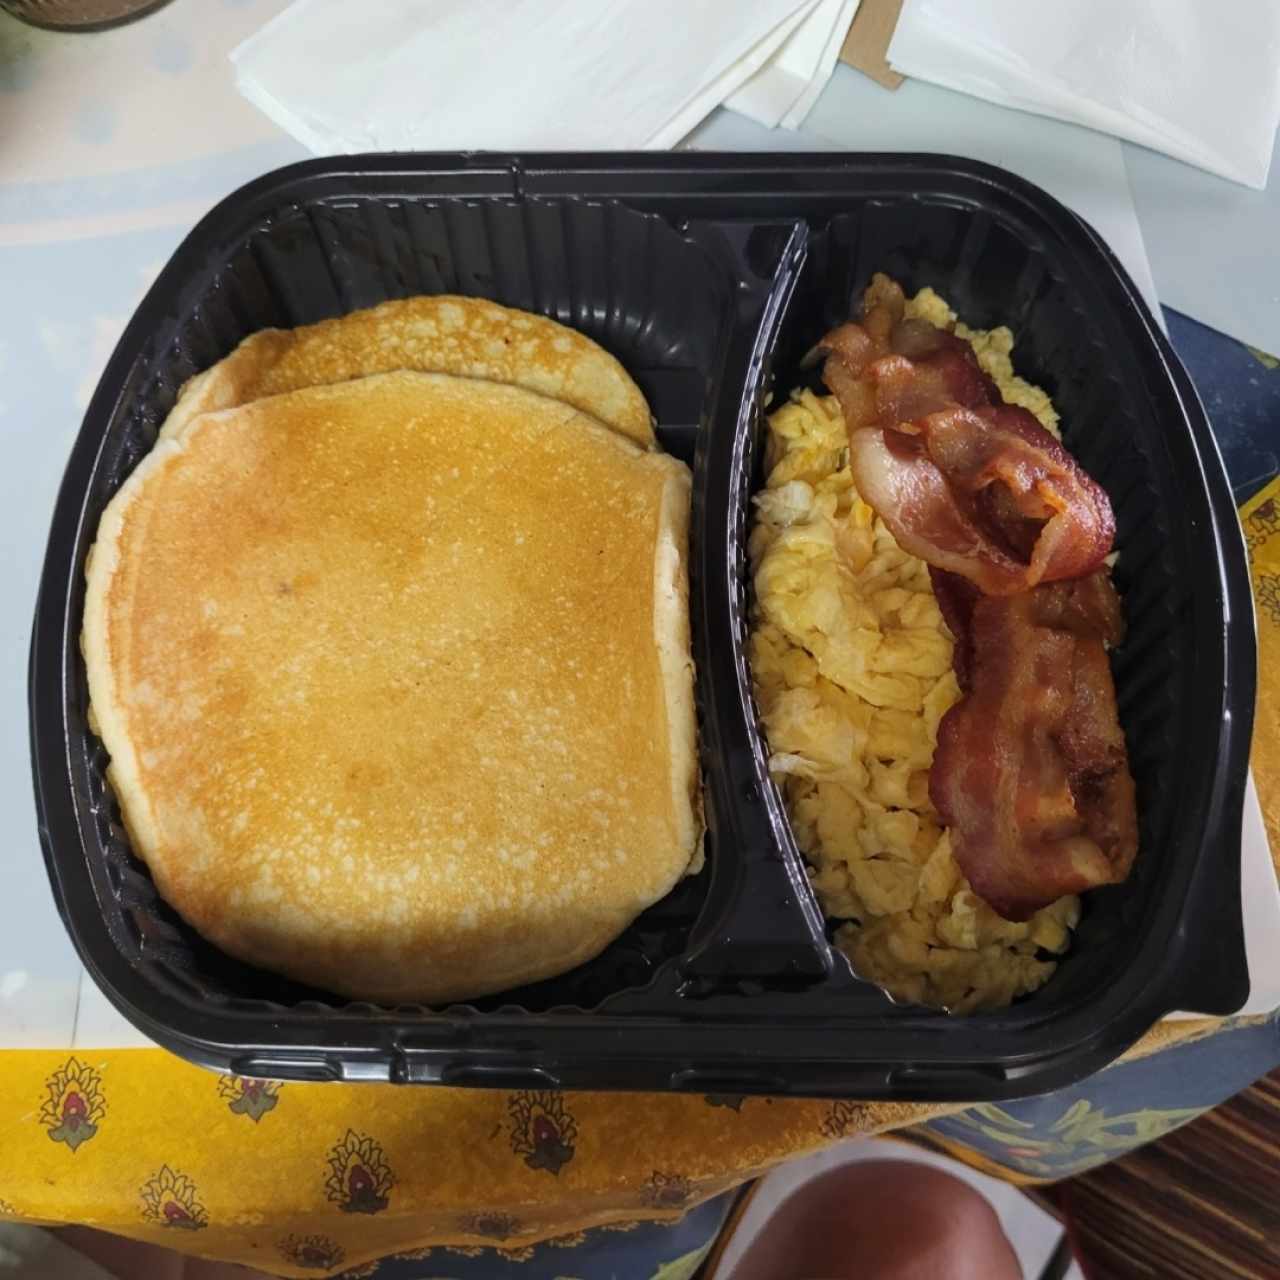 Breakfast Specials - Pancake Platter